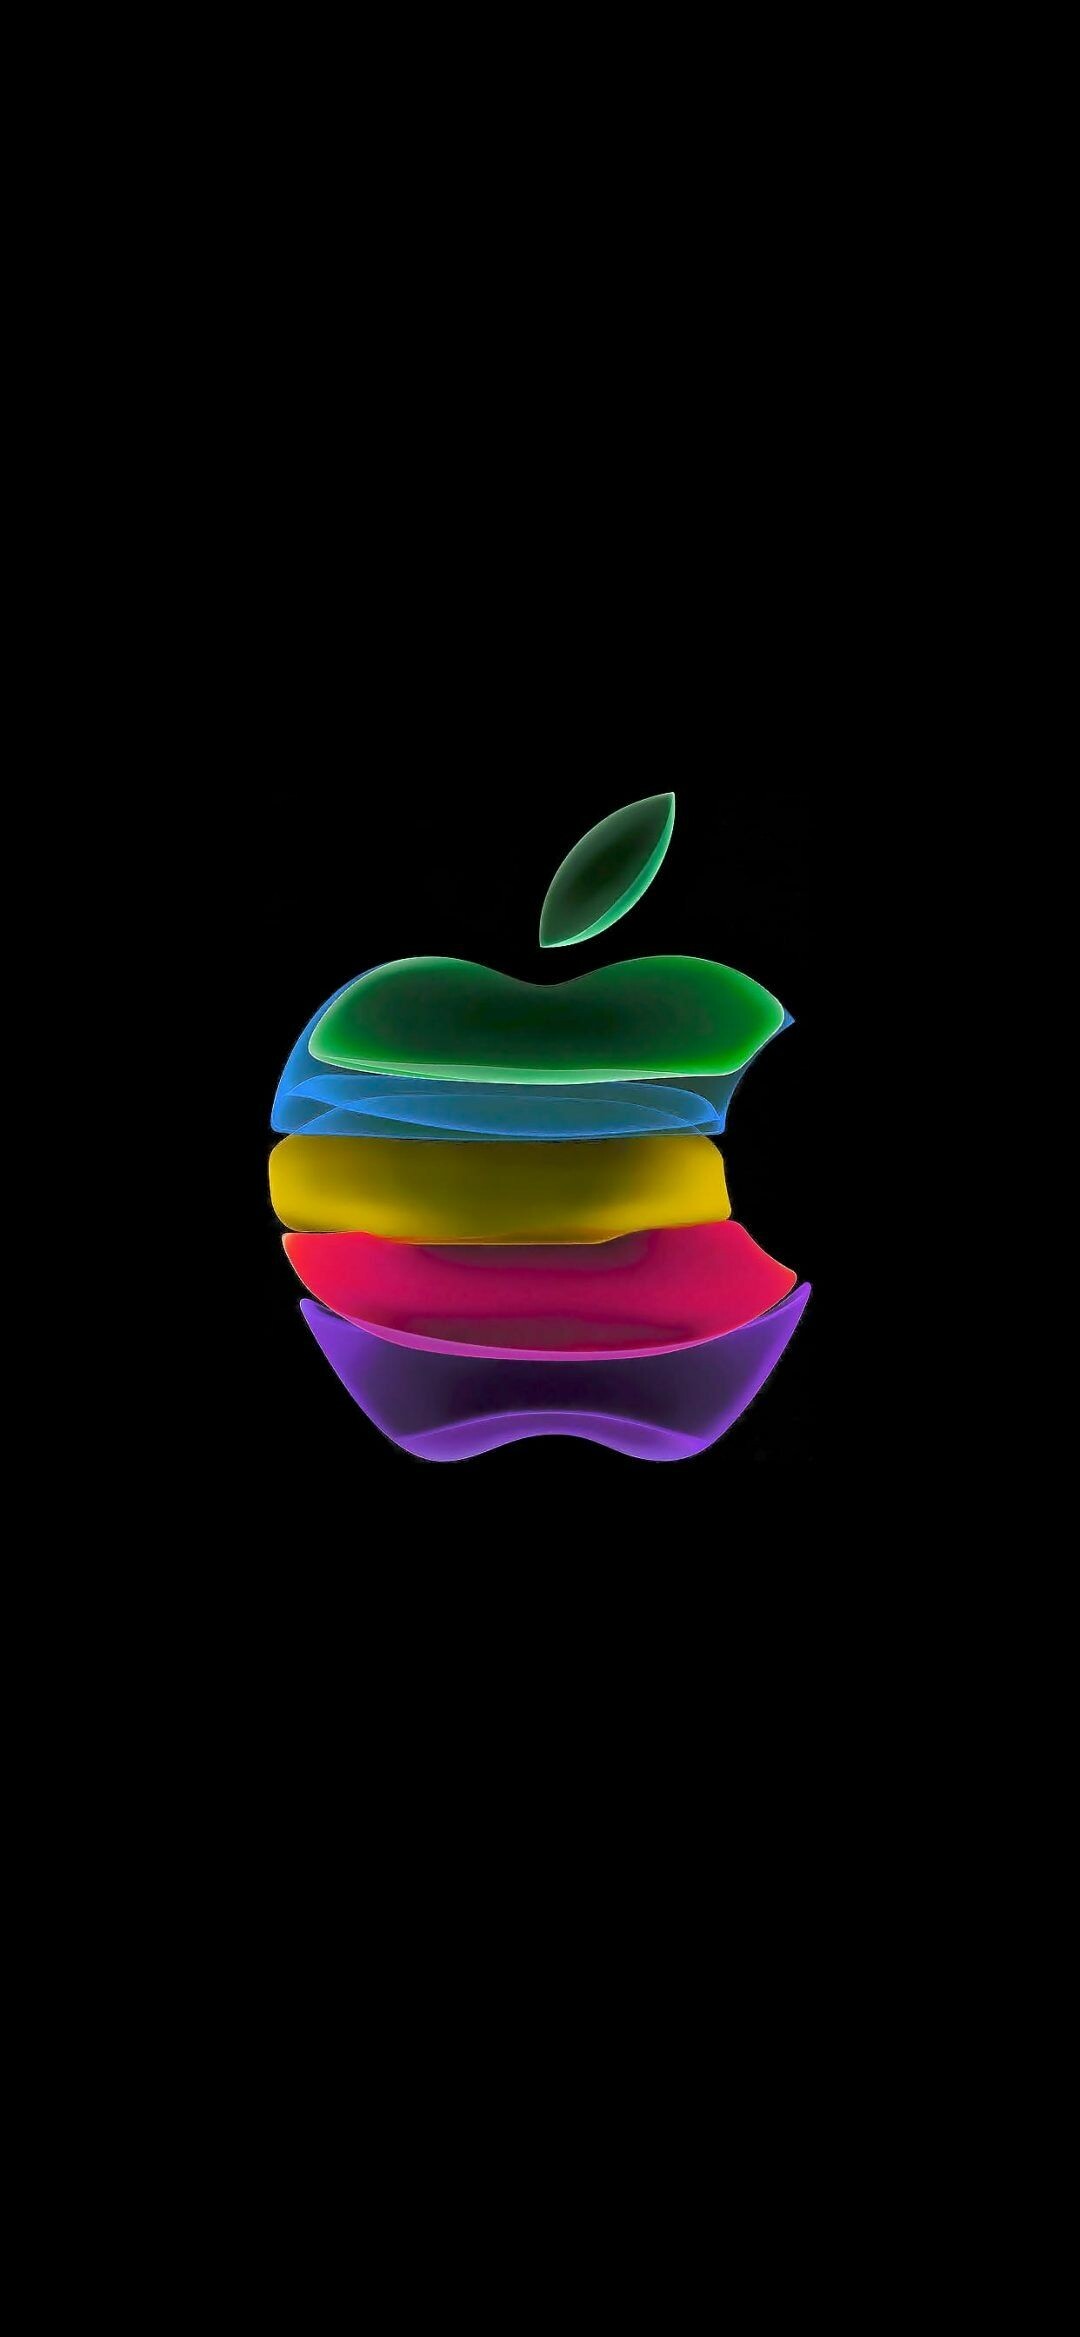 Apple Logo: Famous bitten fruit emblem, American multinational corporation. 1080x2340 HD Wallpaper.